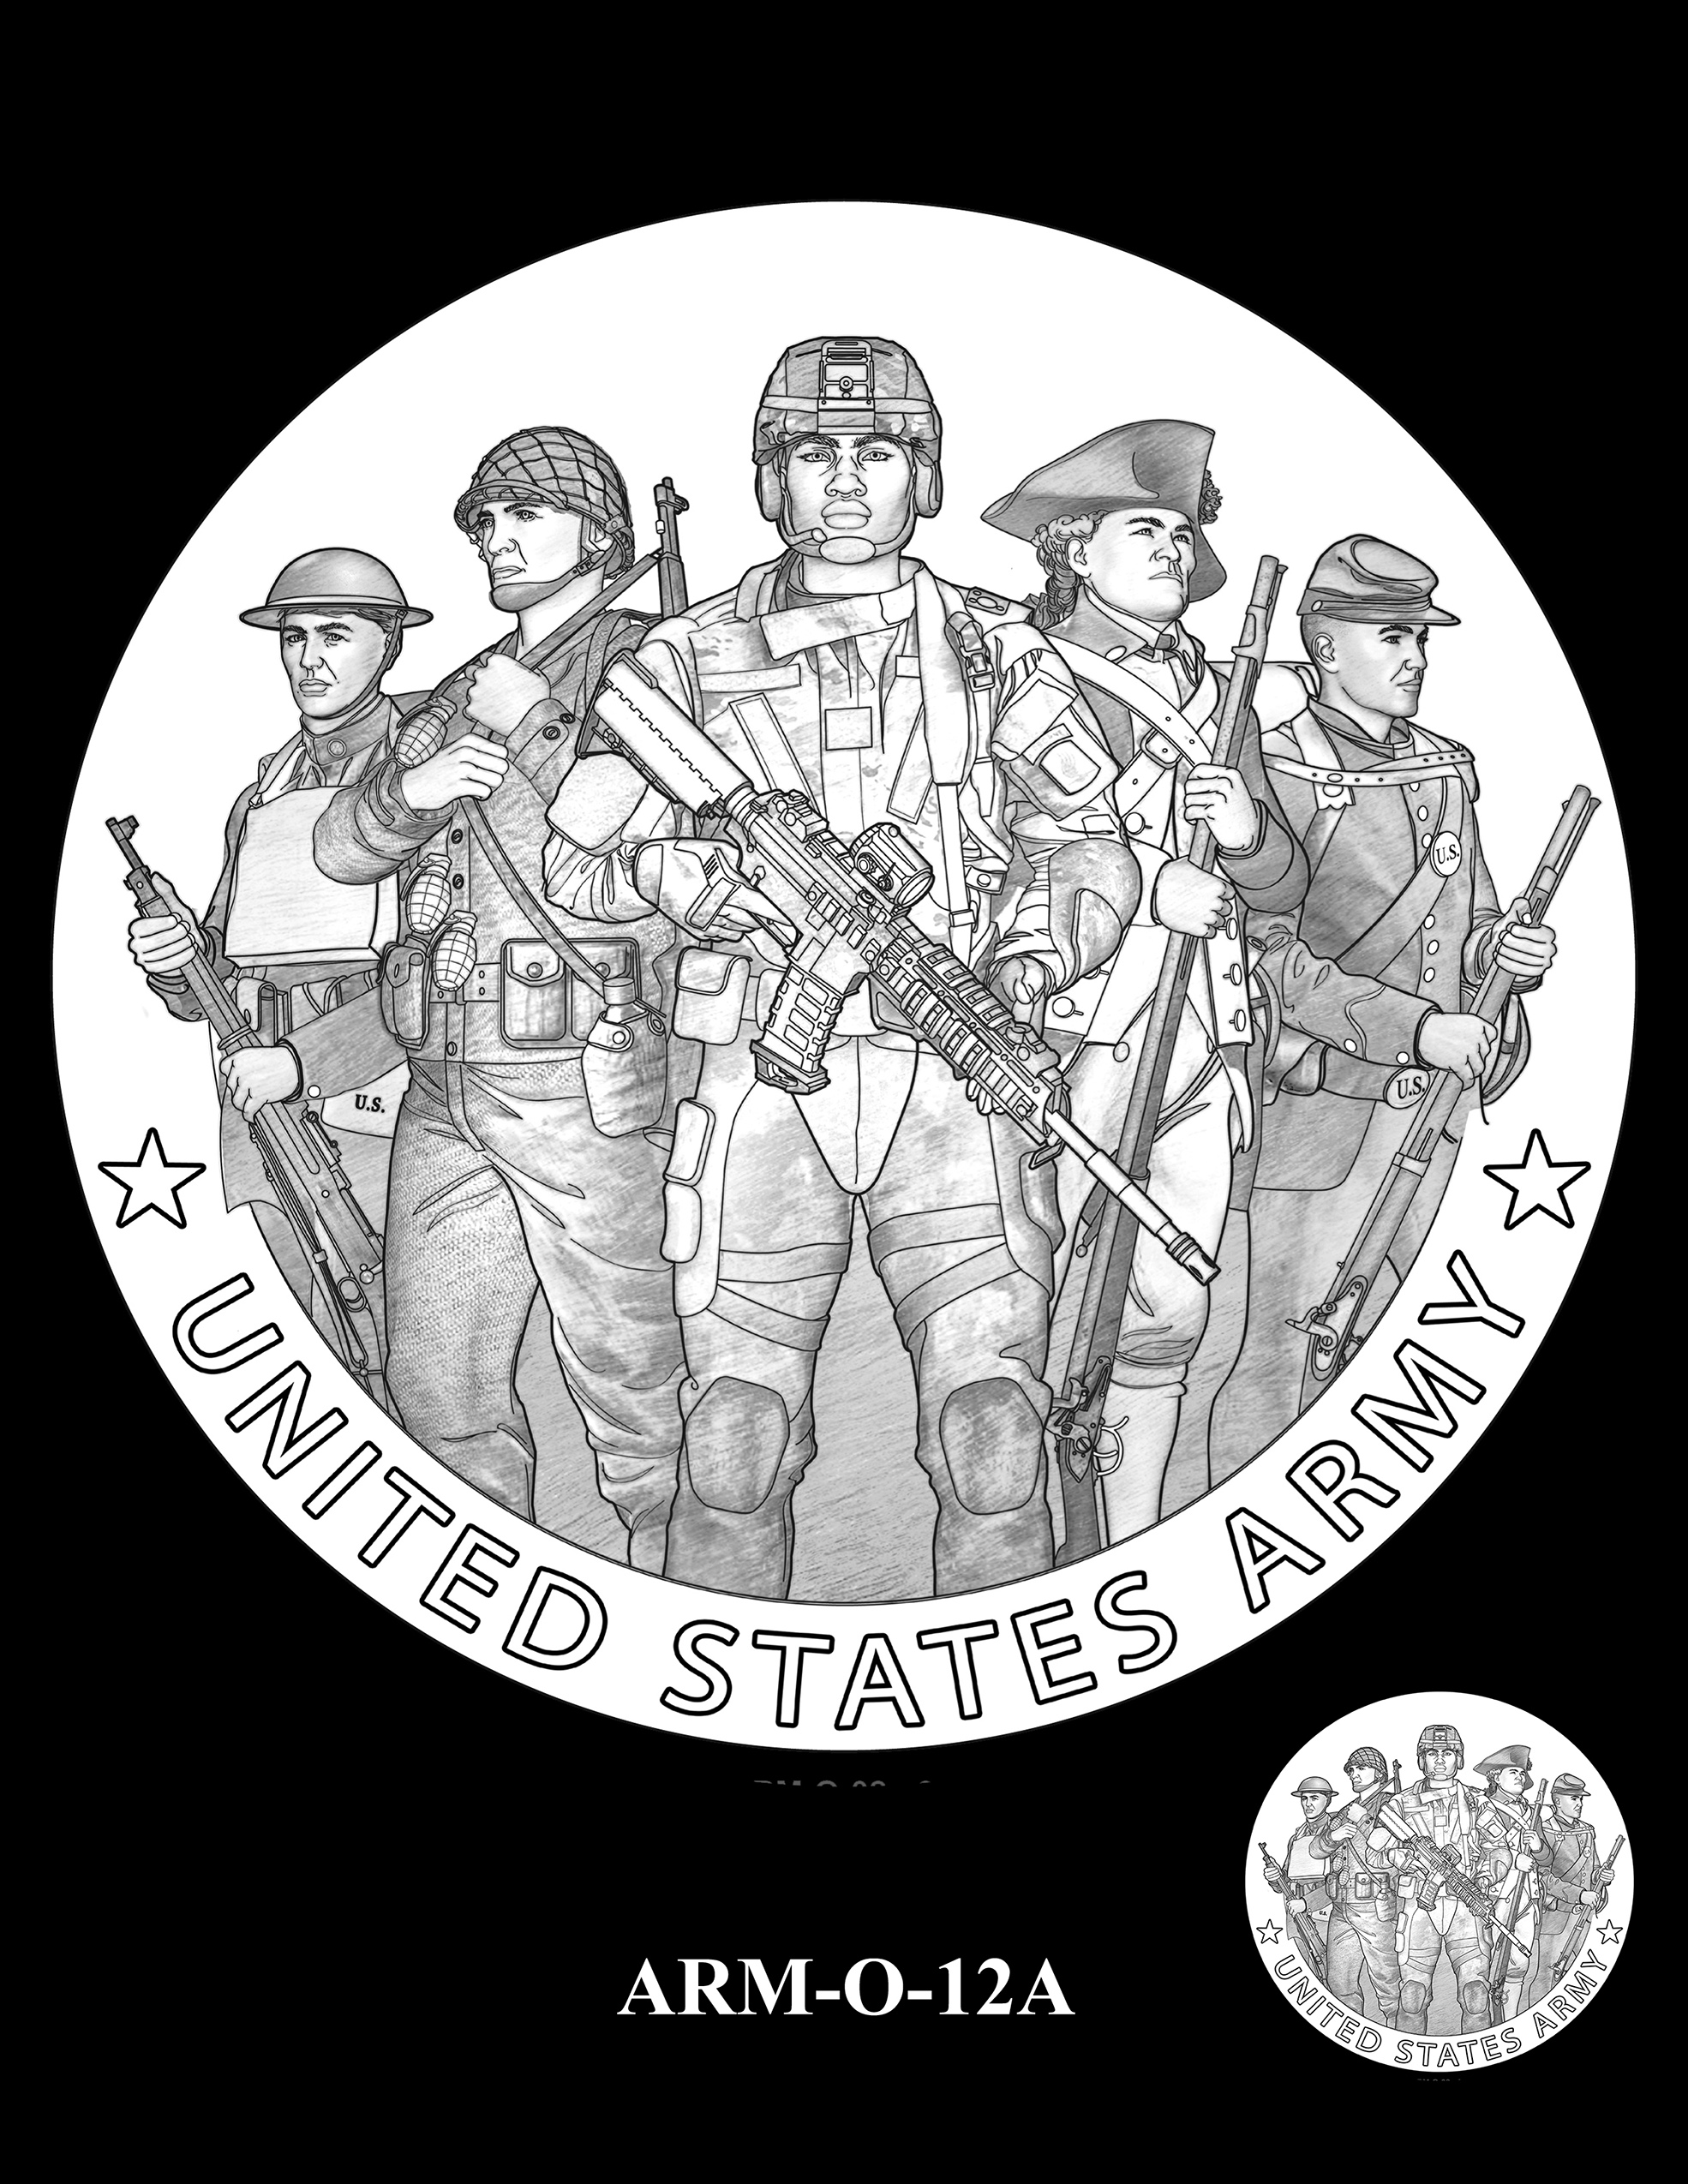 ARM-O-12A -- United States Army Silver Medal